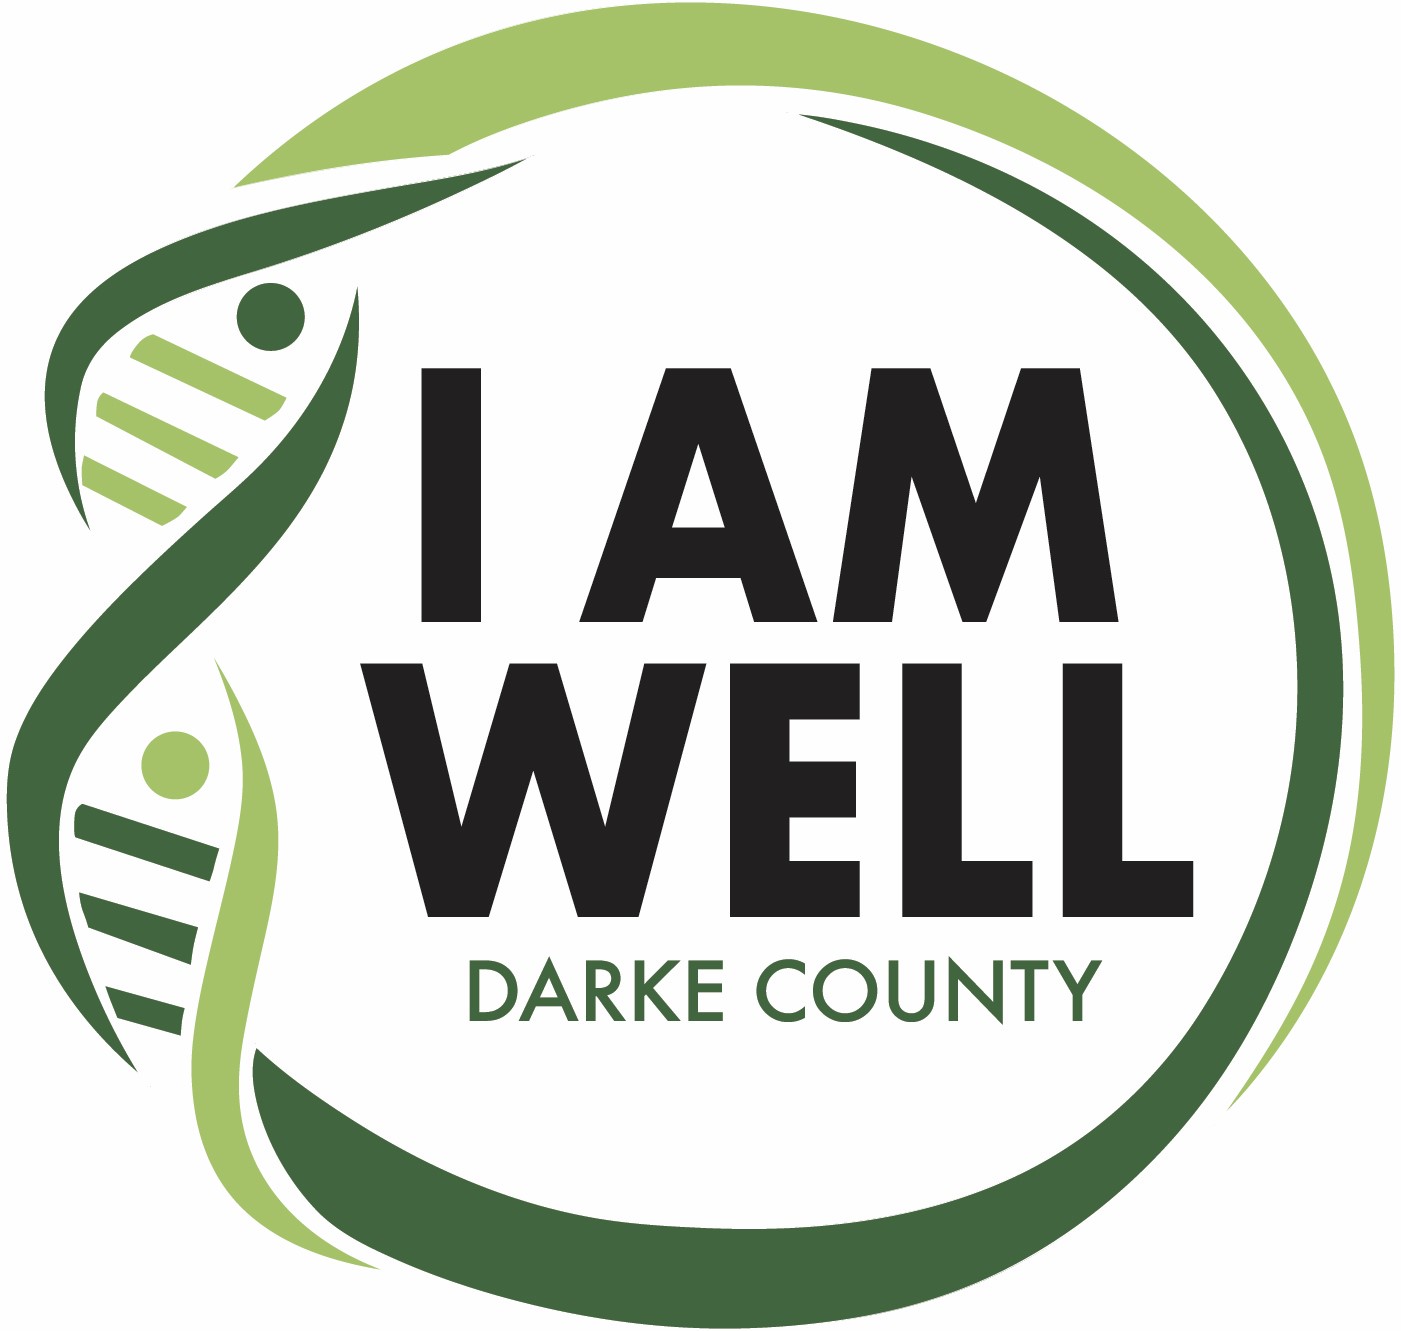 I Am Well Darke County